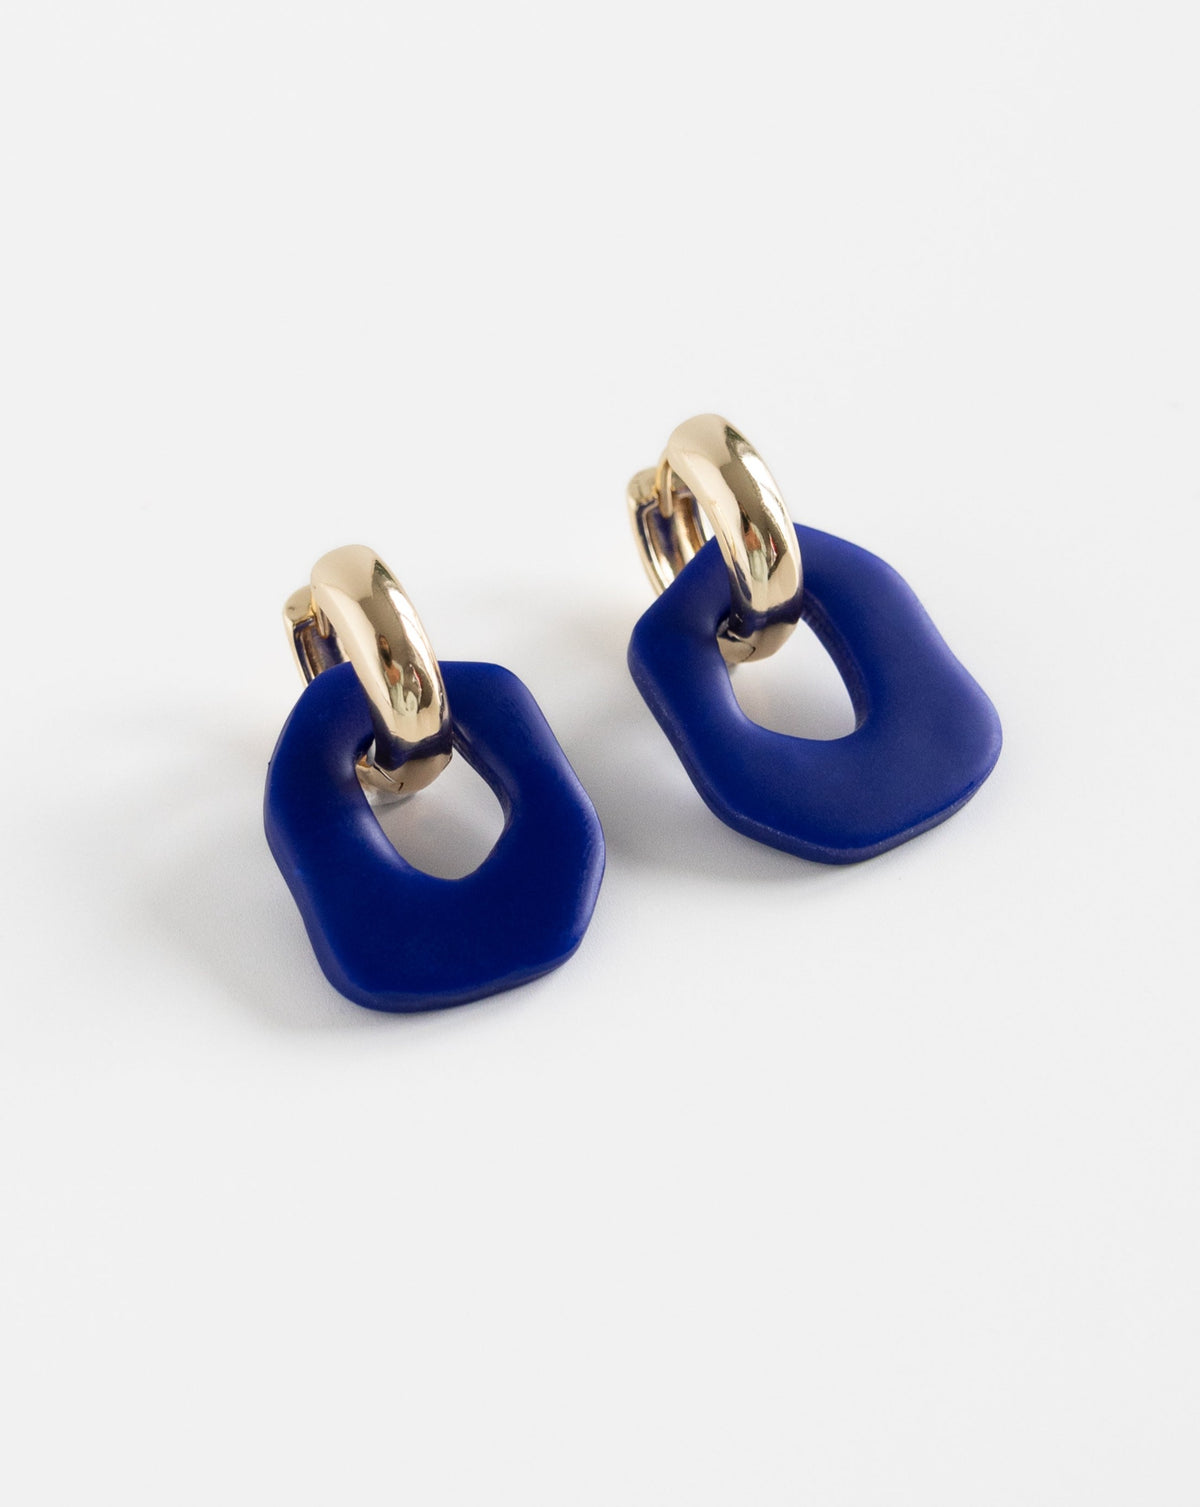 Close-up of Darien earrings in Hue blue with gold hoops